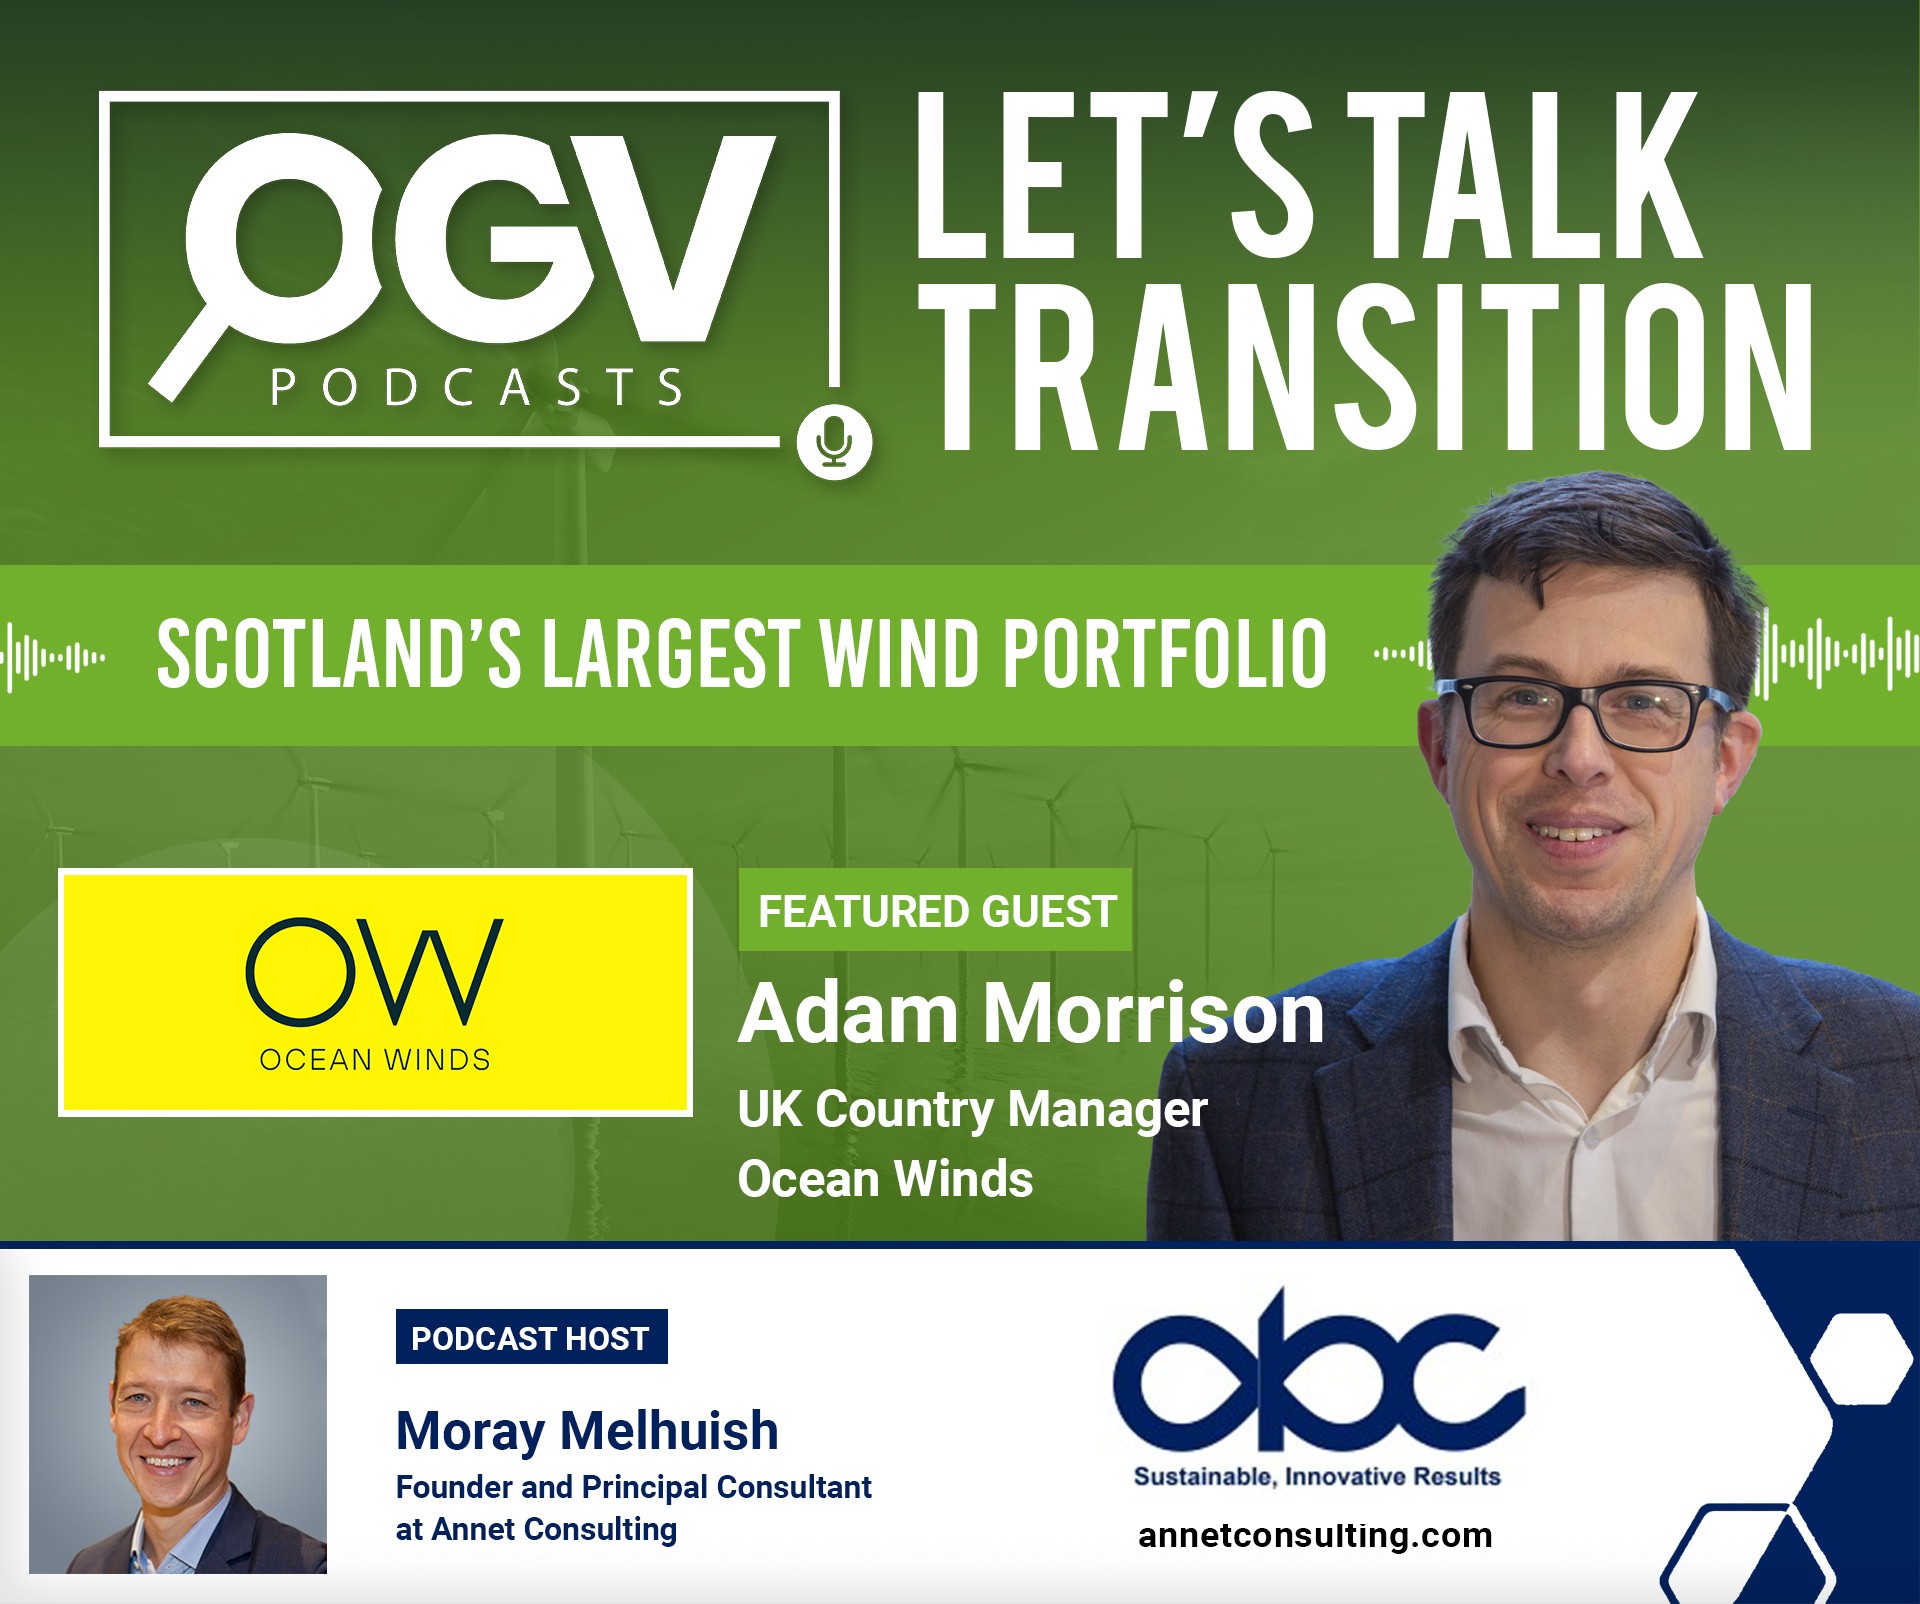 Scotland's largest wind portfolio